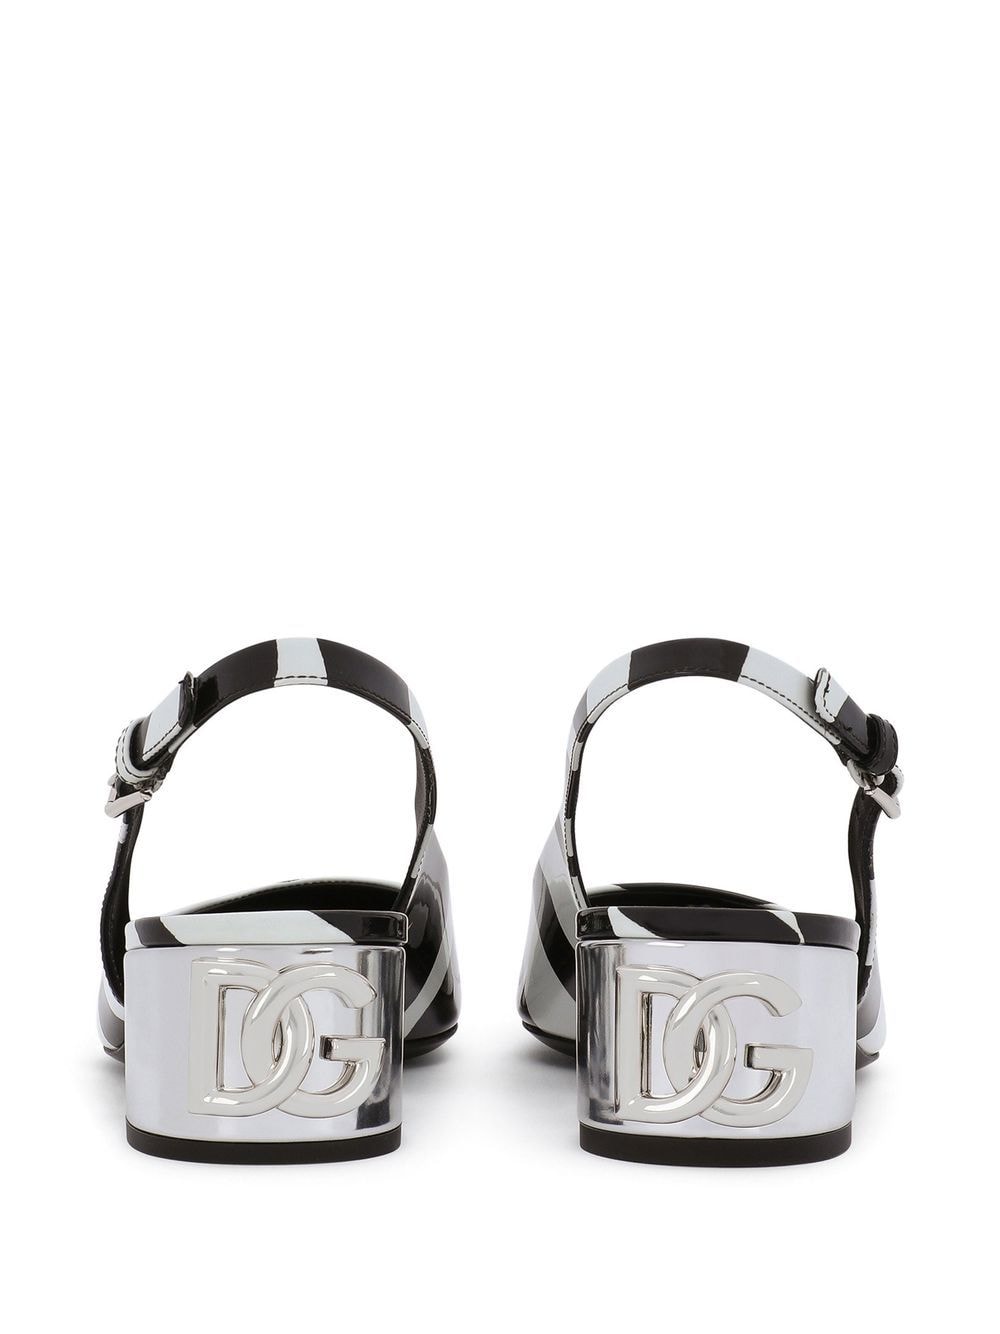 Dolce&Gabbana Cruise With Heel Black